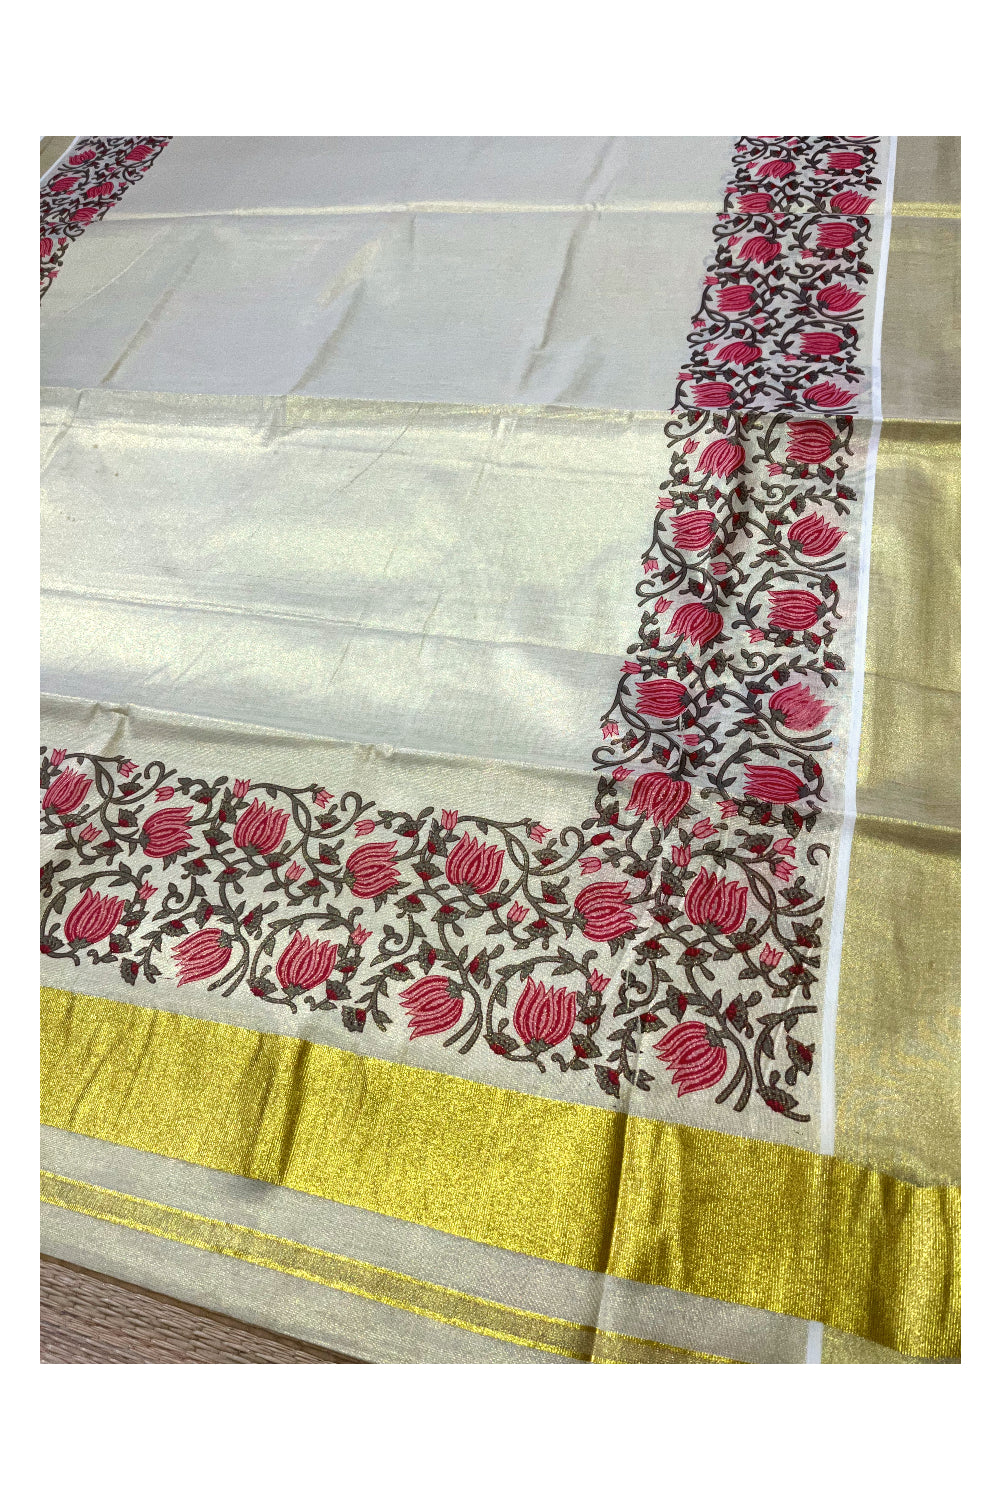 Southloom Jaipur Artisans & Kerala Weavers Collab Pink and Grey Floral Printed Tissue Kasavu Saree (2023 Onam Exclusive Kerala Saree)